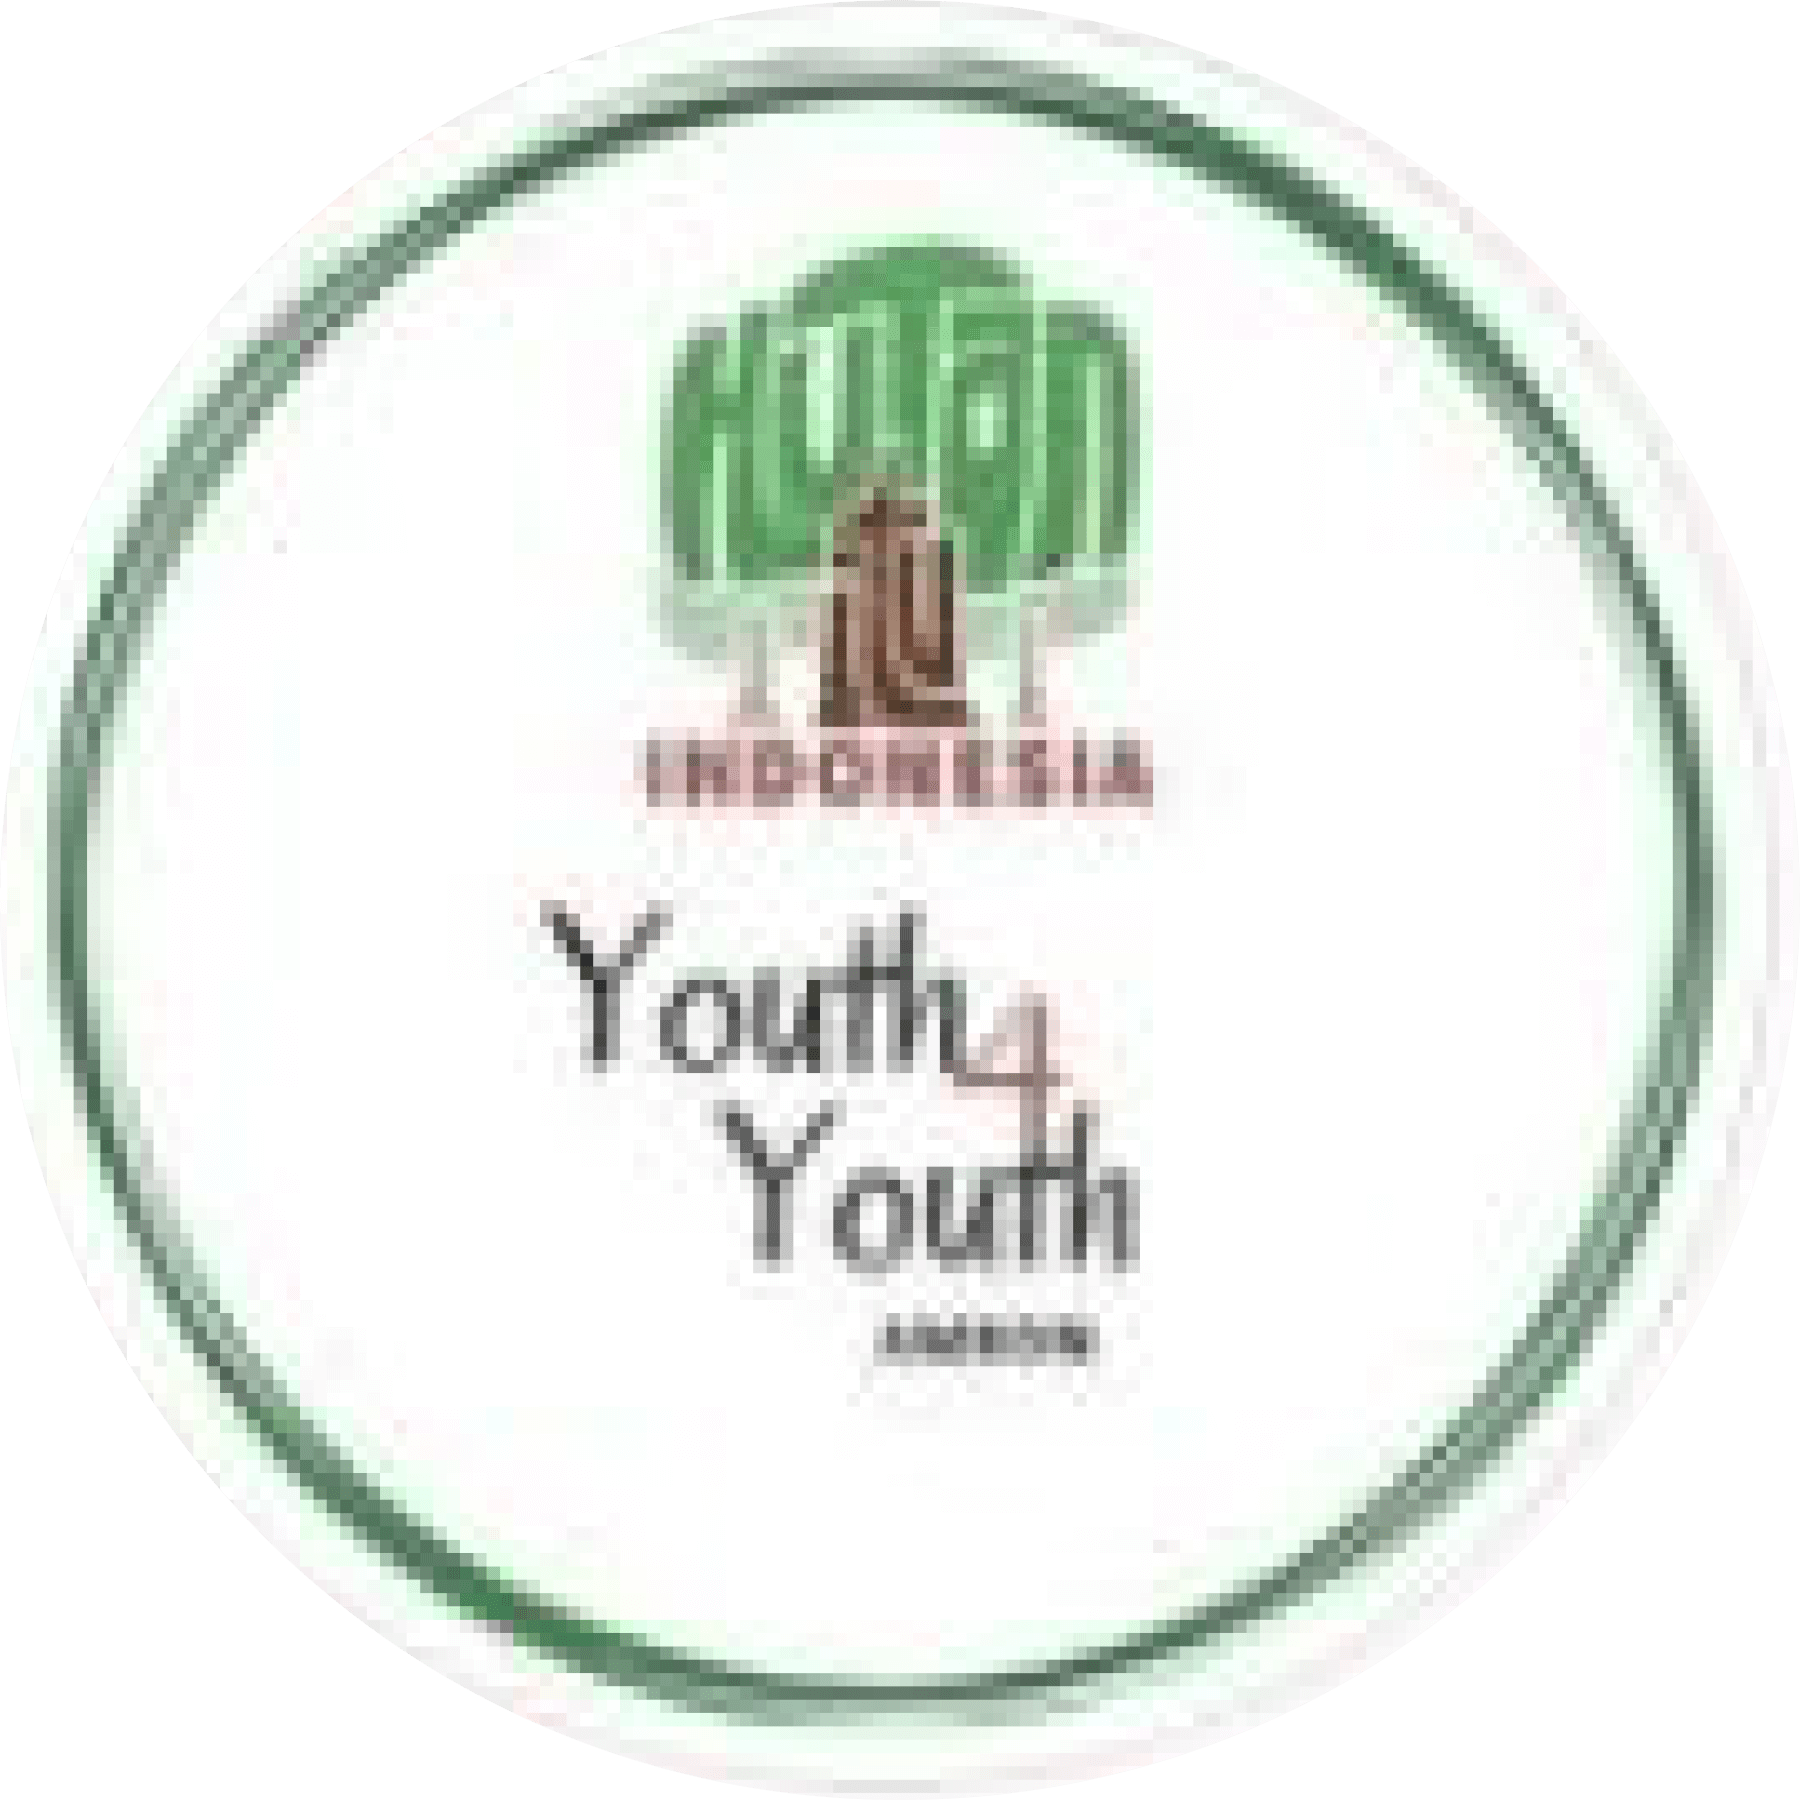 Youth4youth Ambon